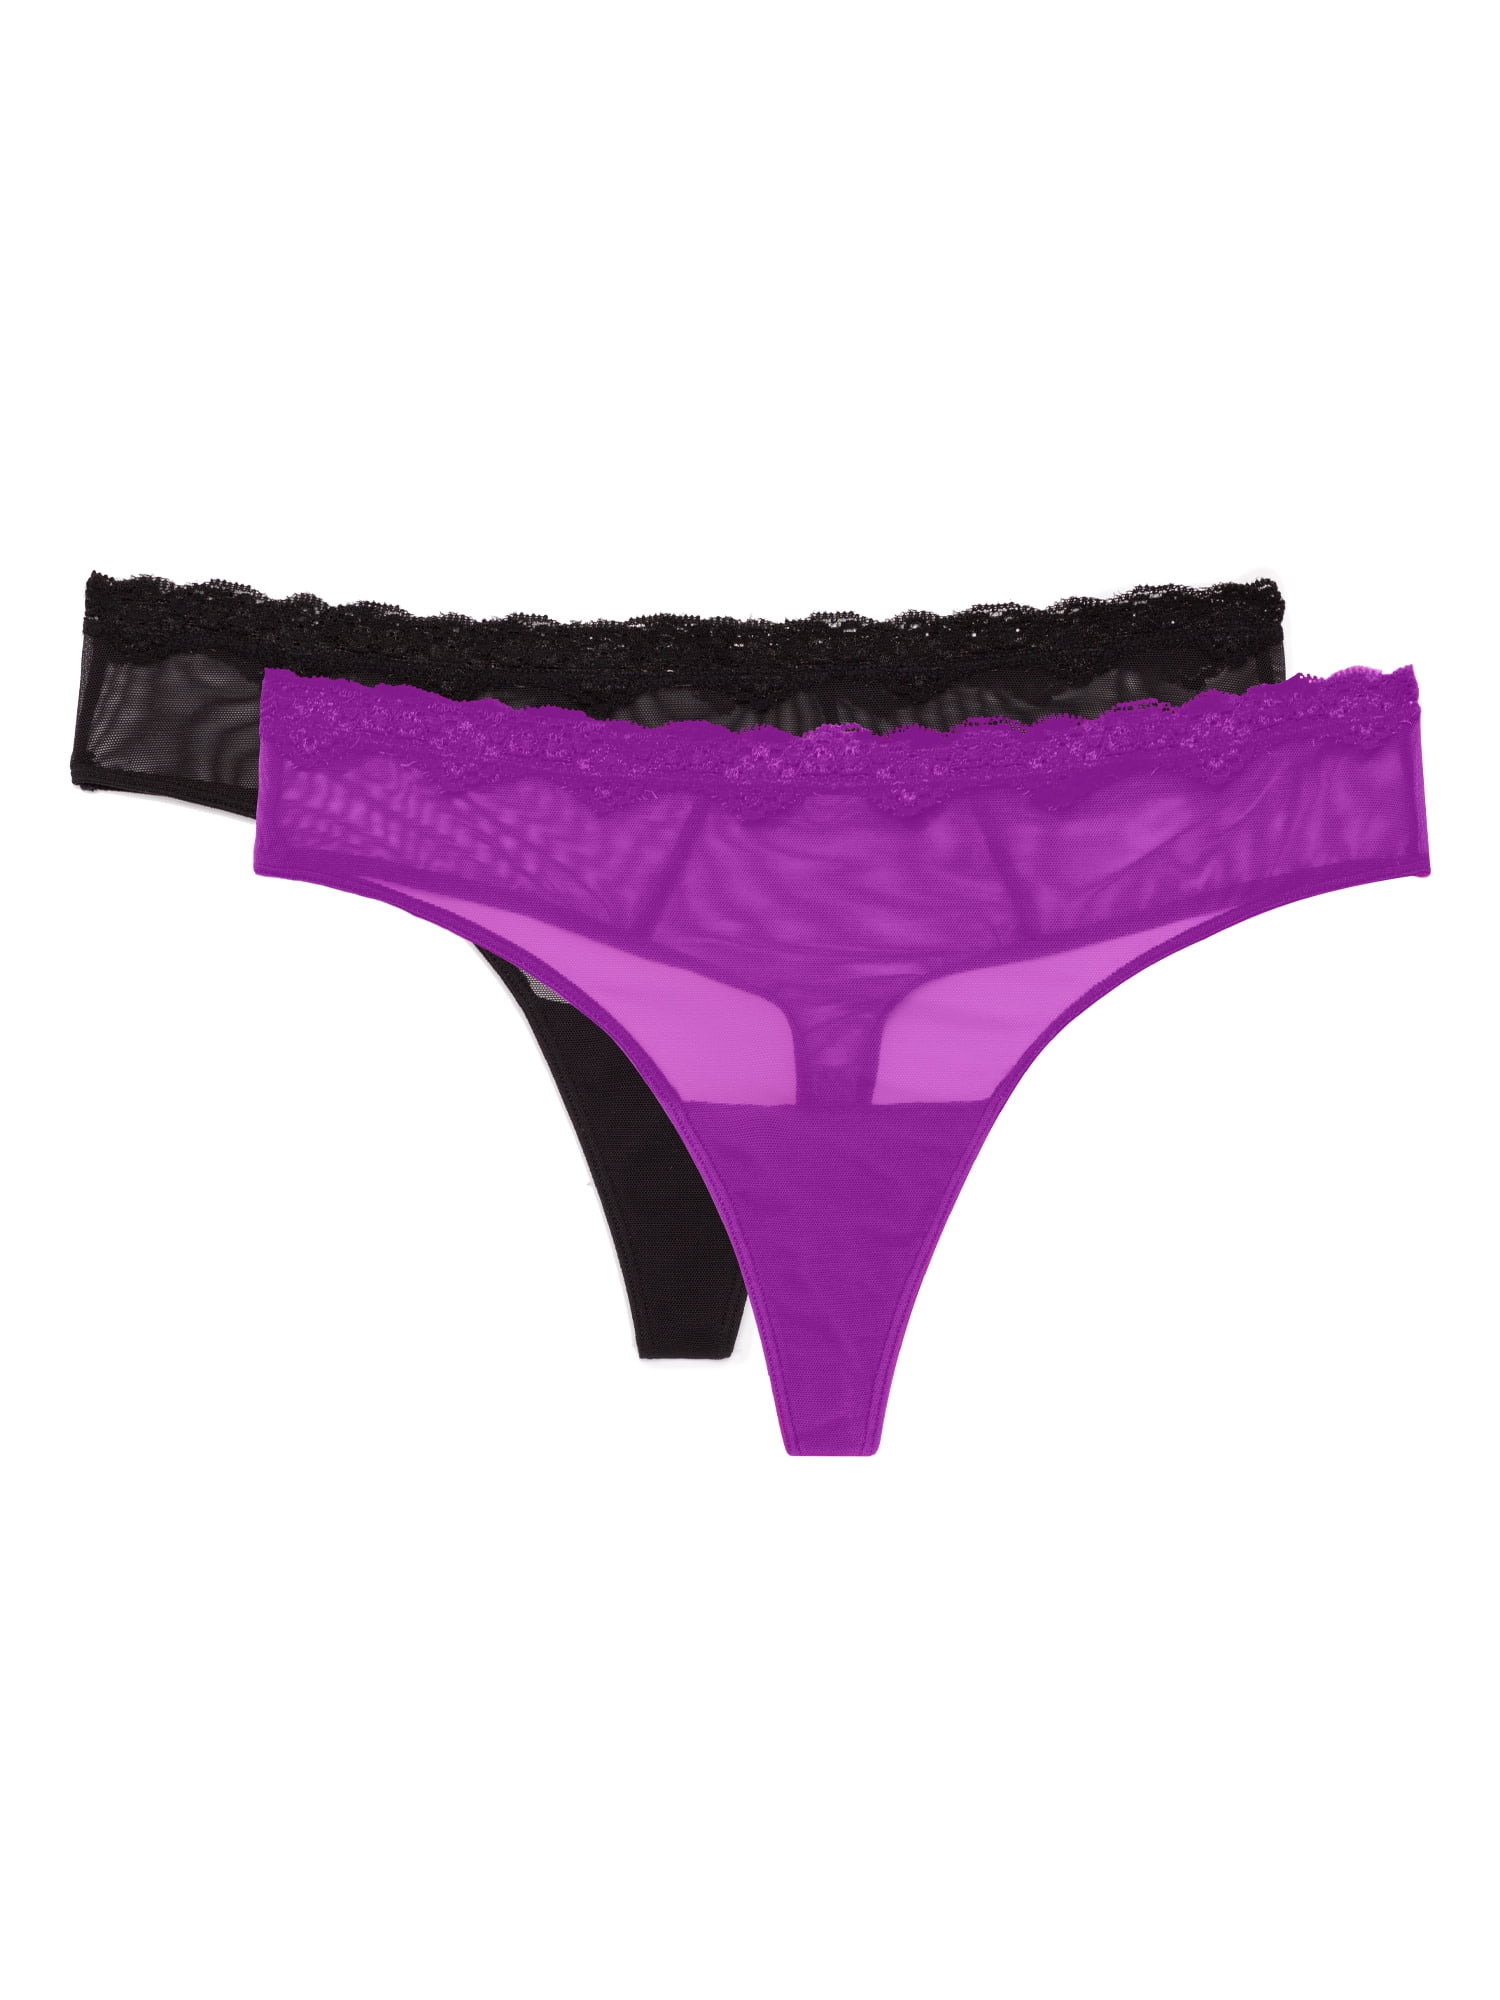 Celamirio Women's Sexy Lace Thong Panties Purple S at